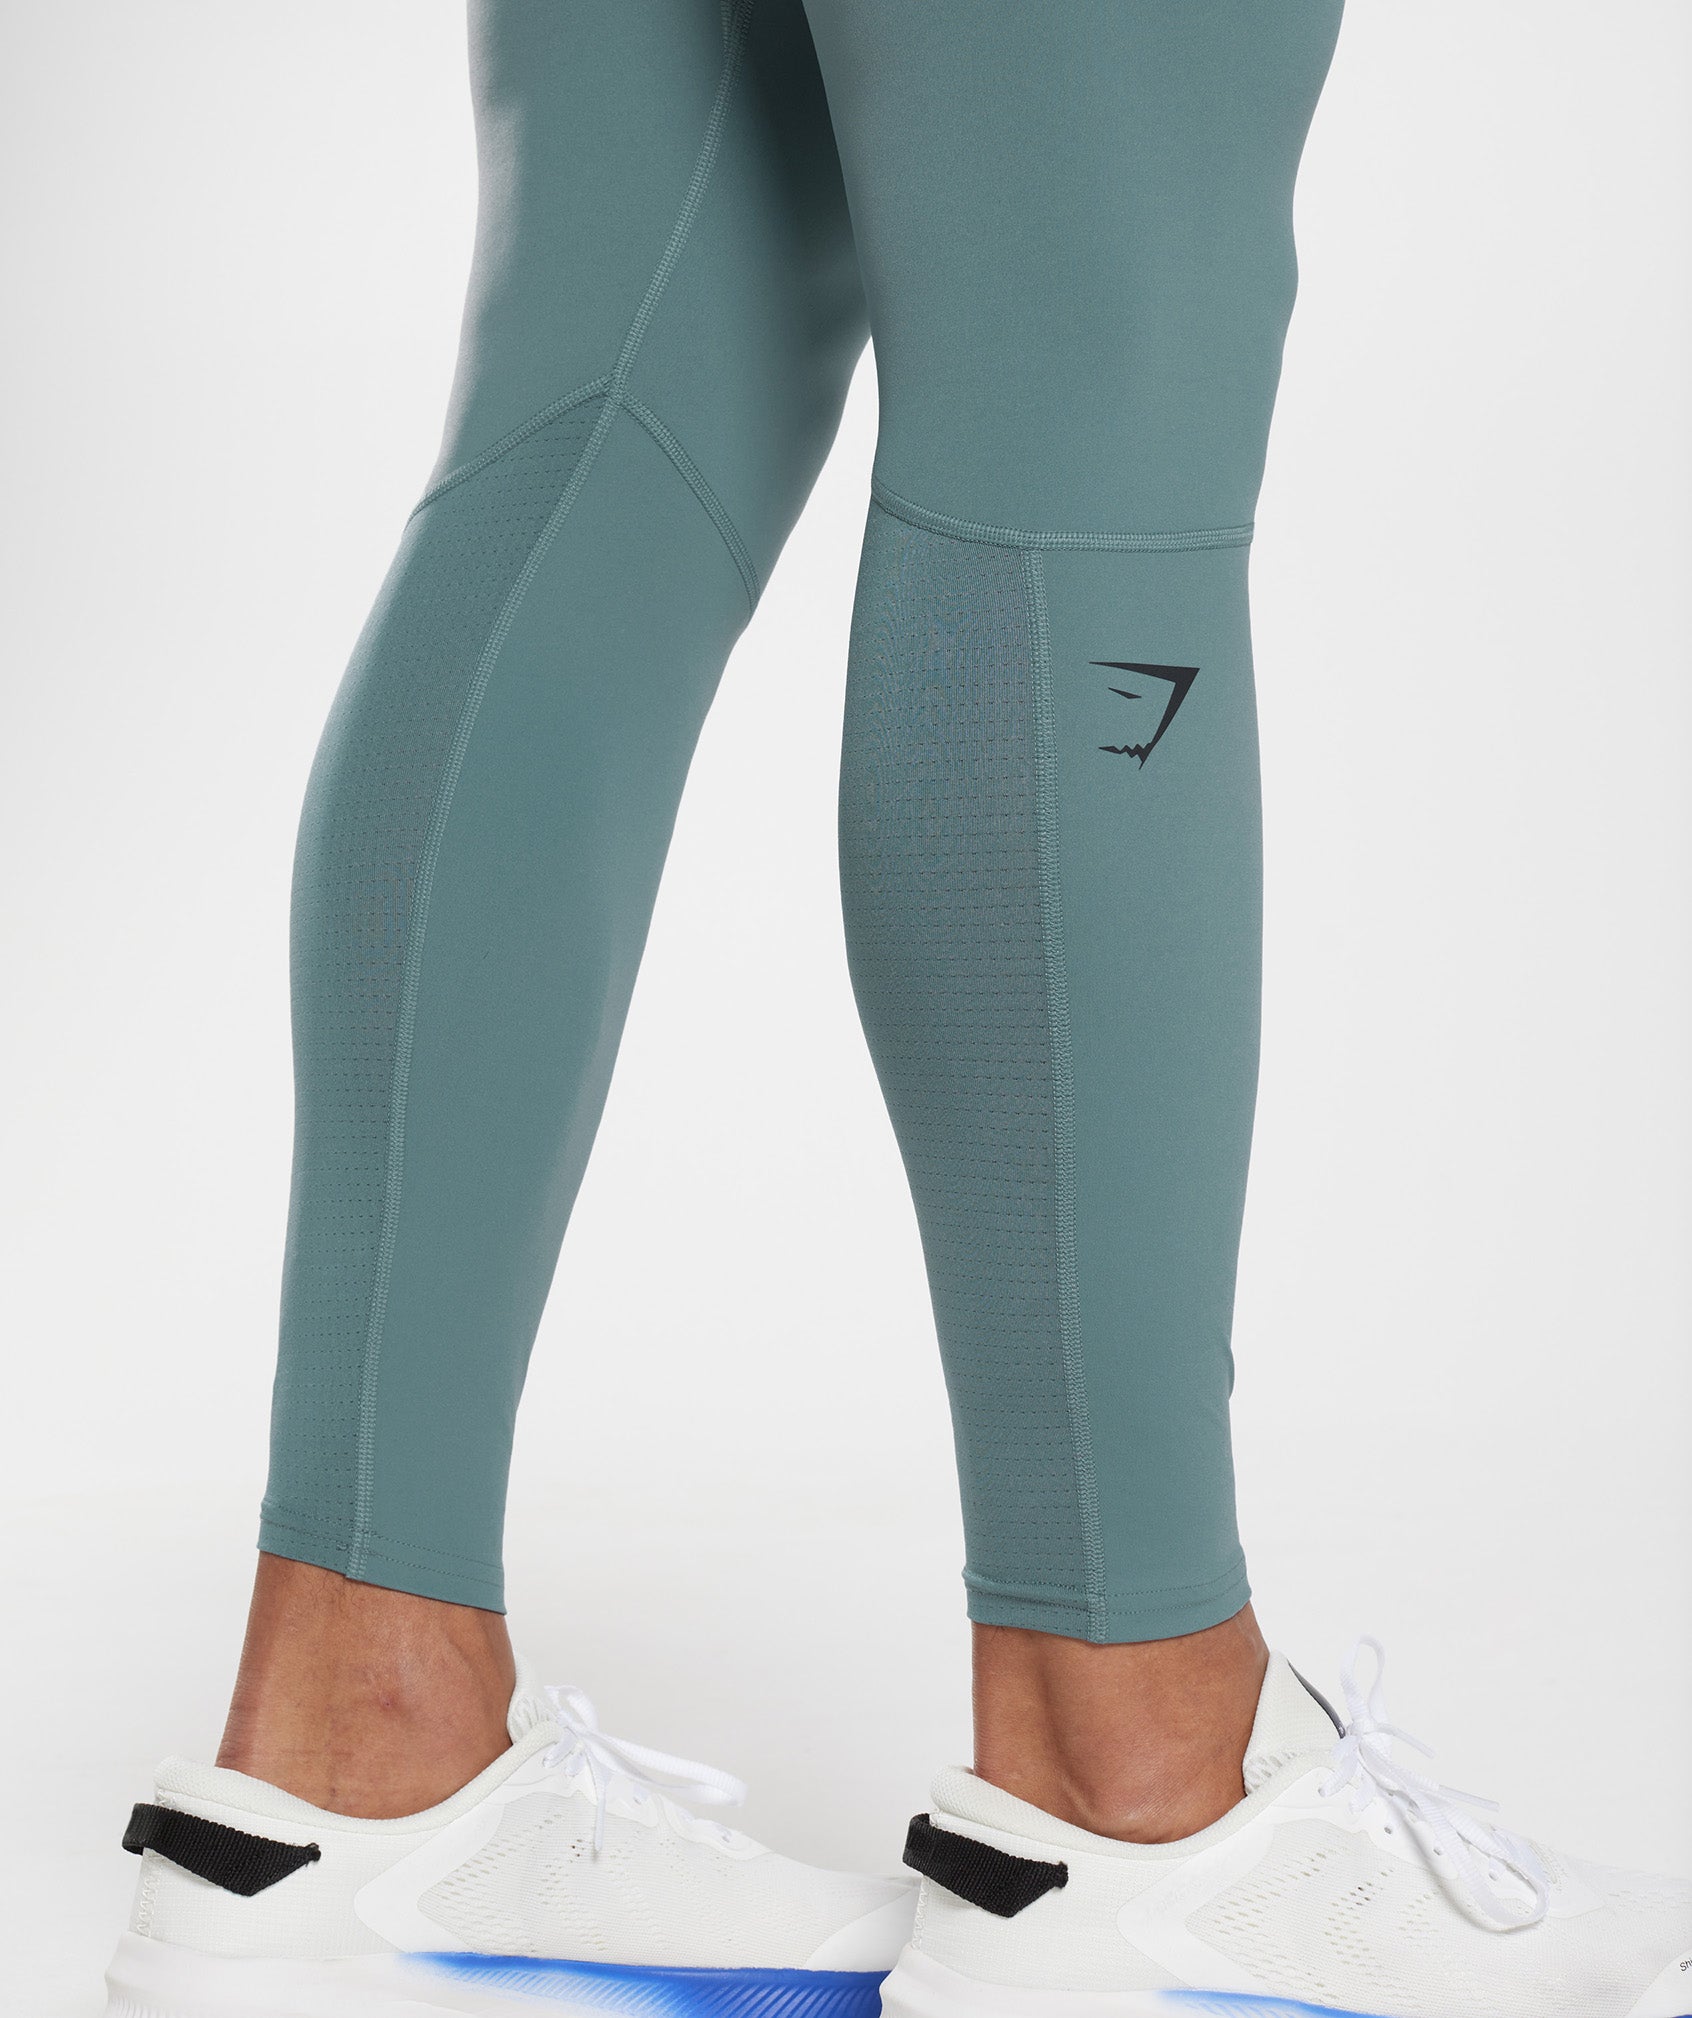 Gymshark Leggings Thunder Blue Medium Women's NEW - $23 (54% Off Retail)  New With Tags - From Alenka